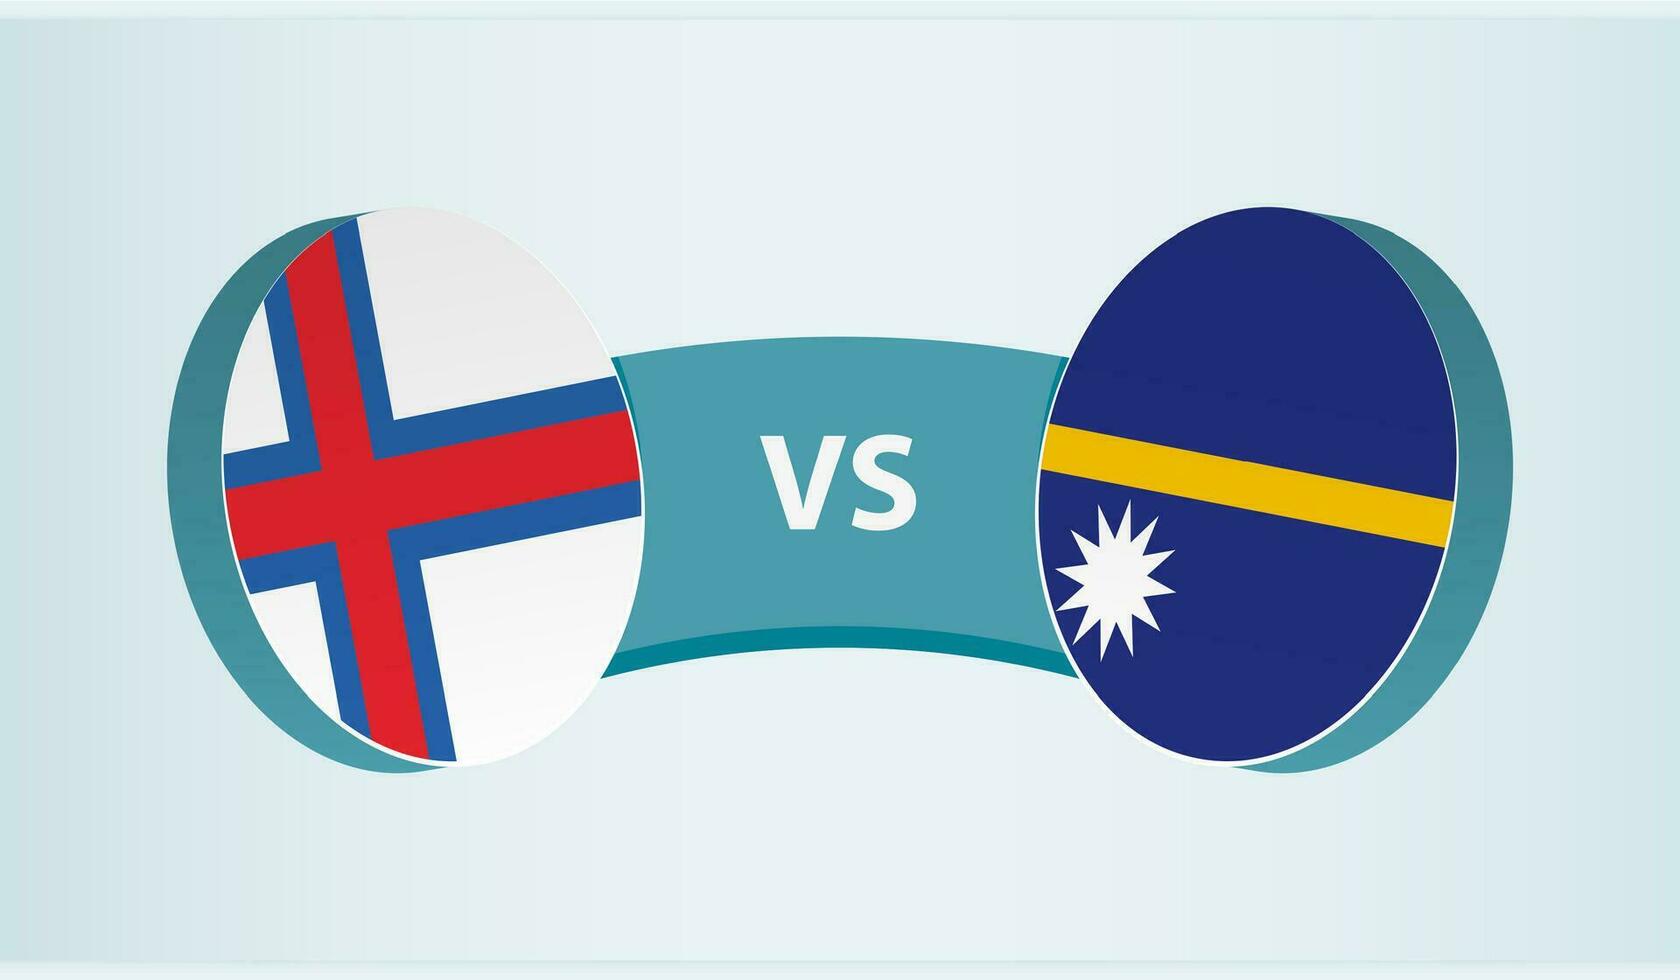 Faroe Islands versus Nauru, team sports competition concept. vector